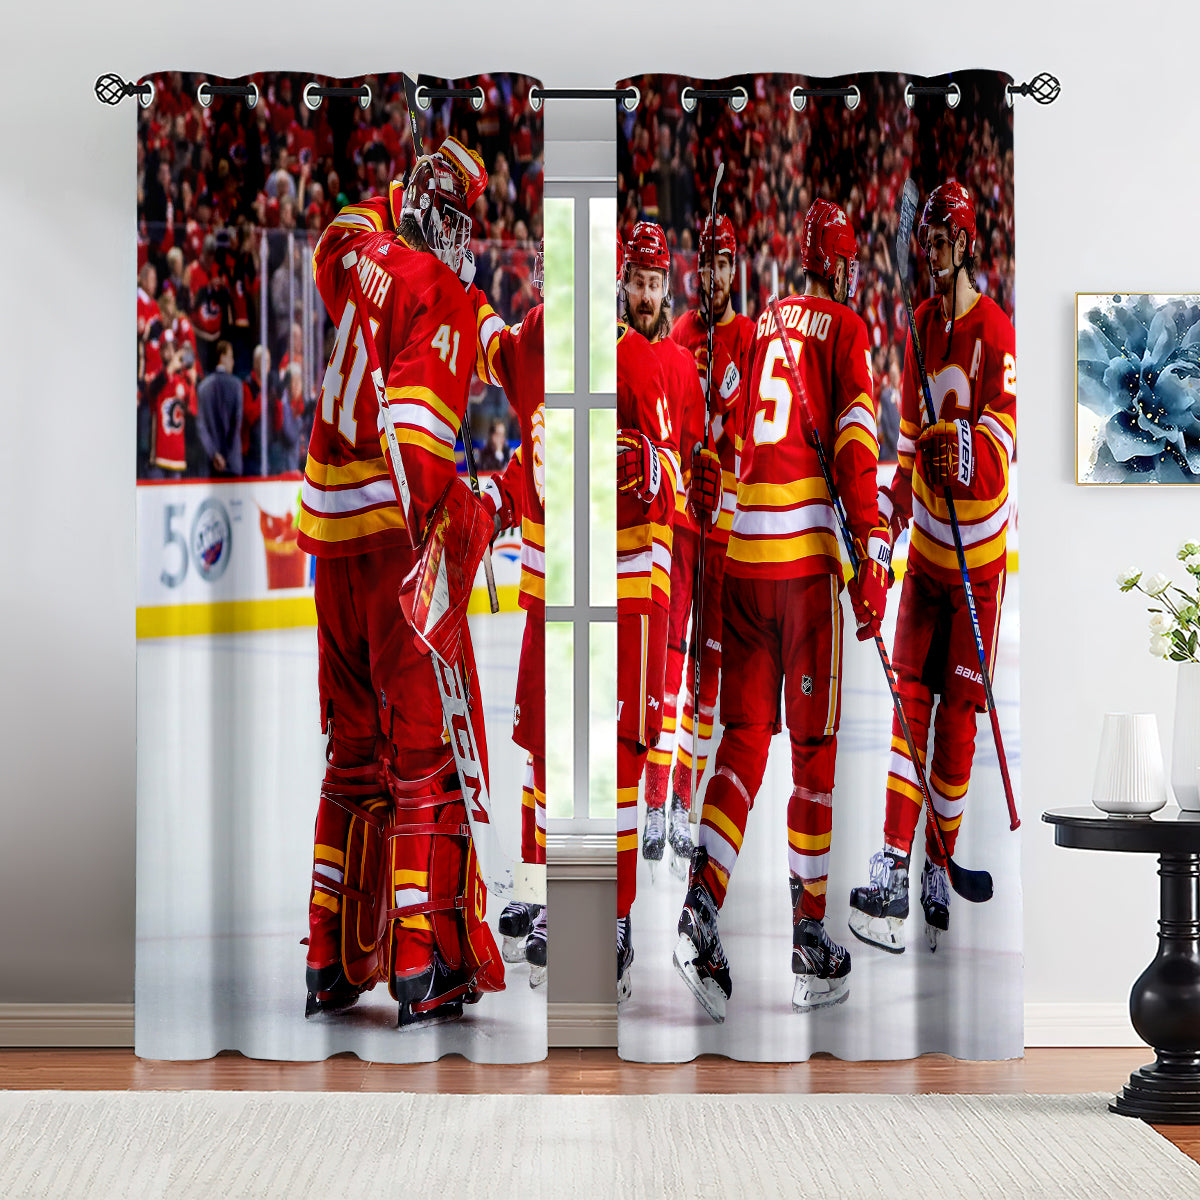 Calgary Flames Hockey League Blackout Curtains Drapes For Window Treatment Set